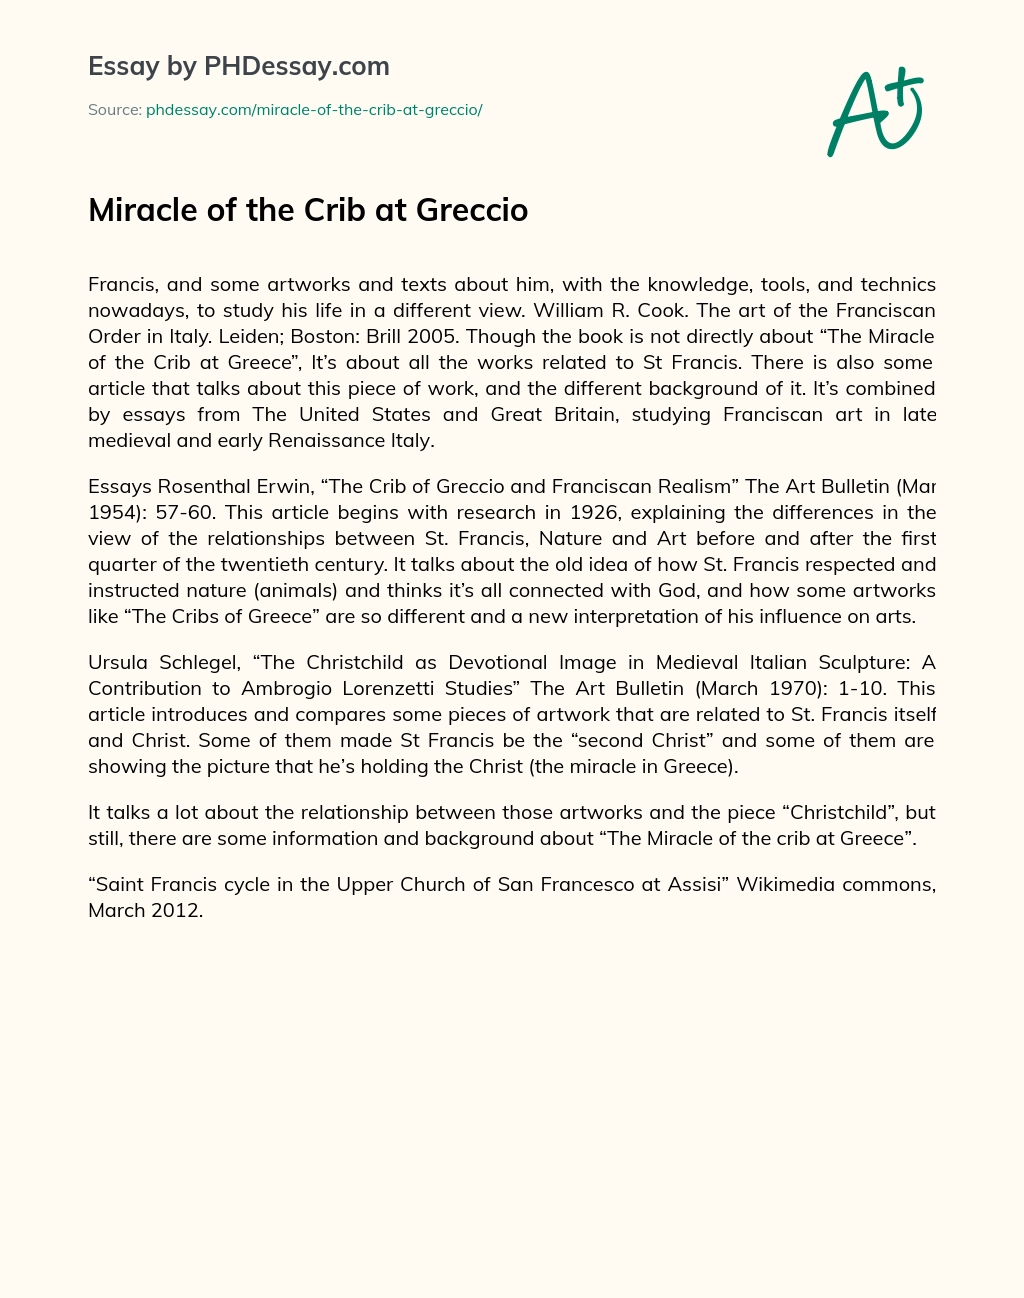 Miracle of the Crib at Greccio essay